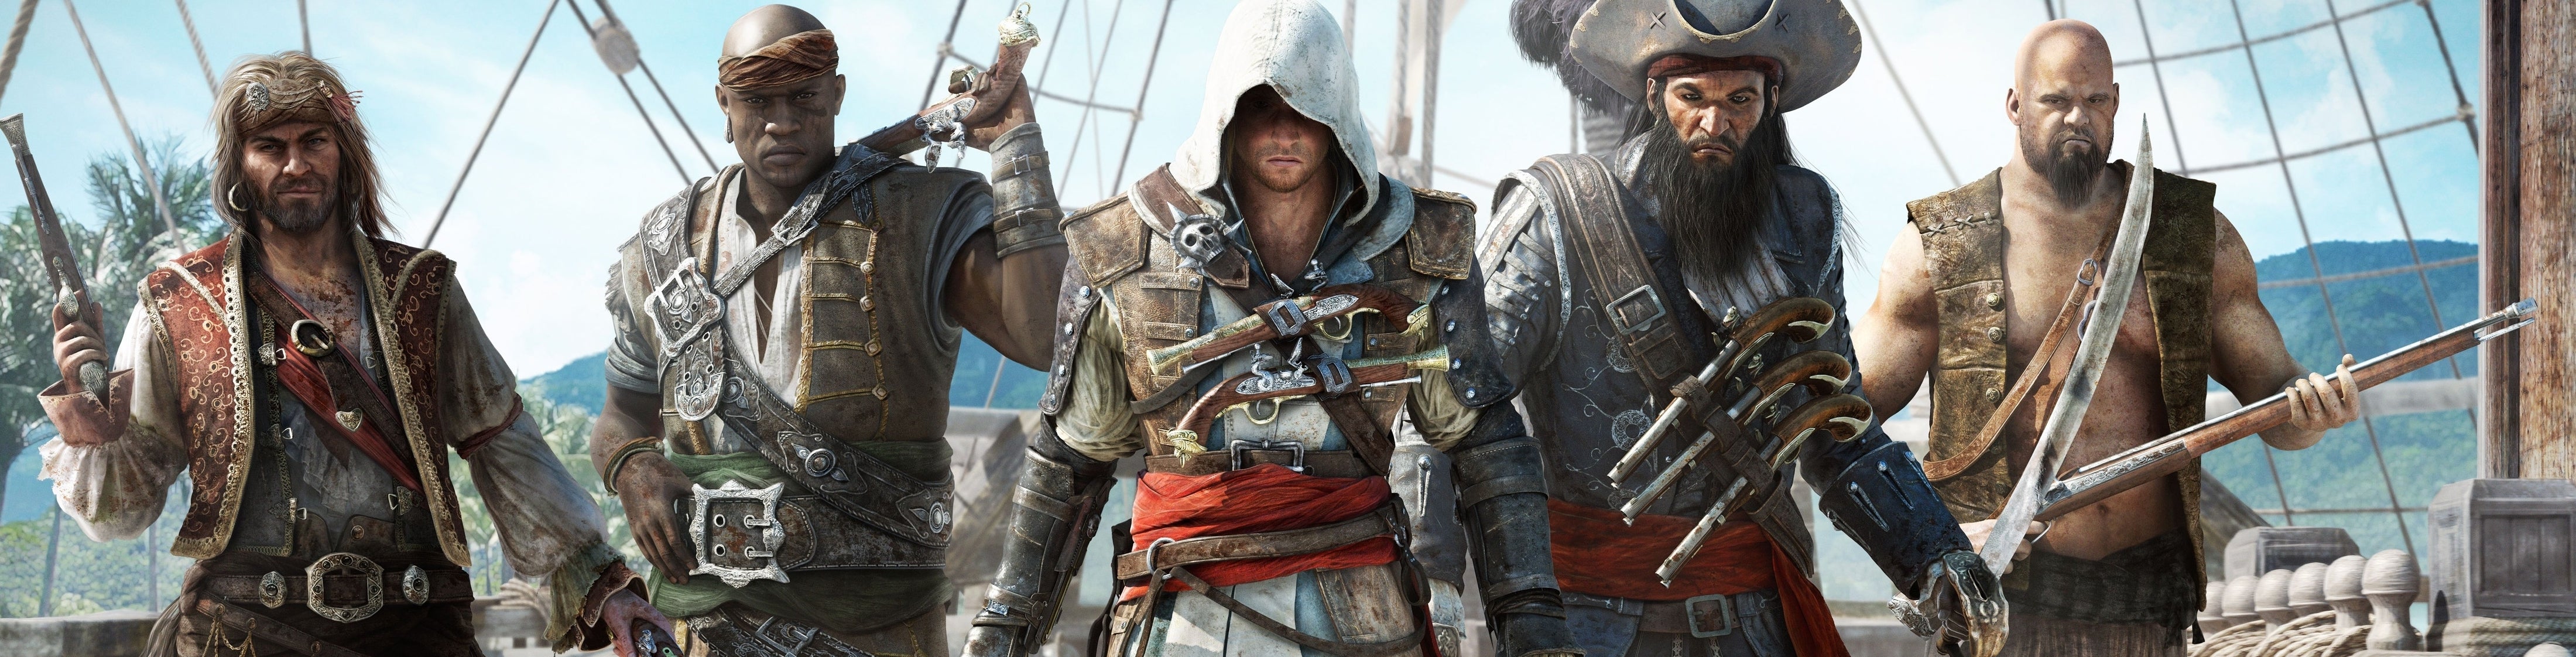 Obrazki dla Digital Foundry kontra next-genowy Assassin's Creed 4: Black Flag